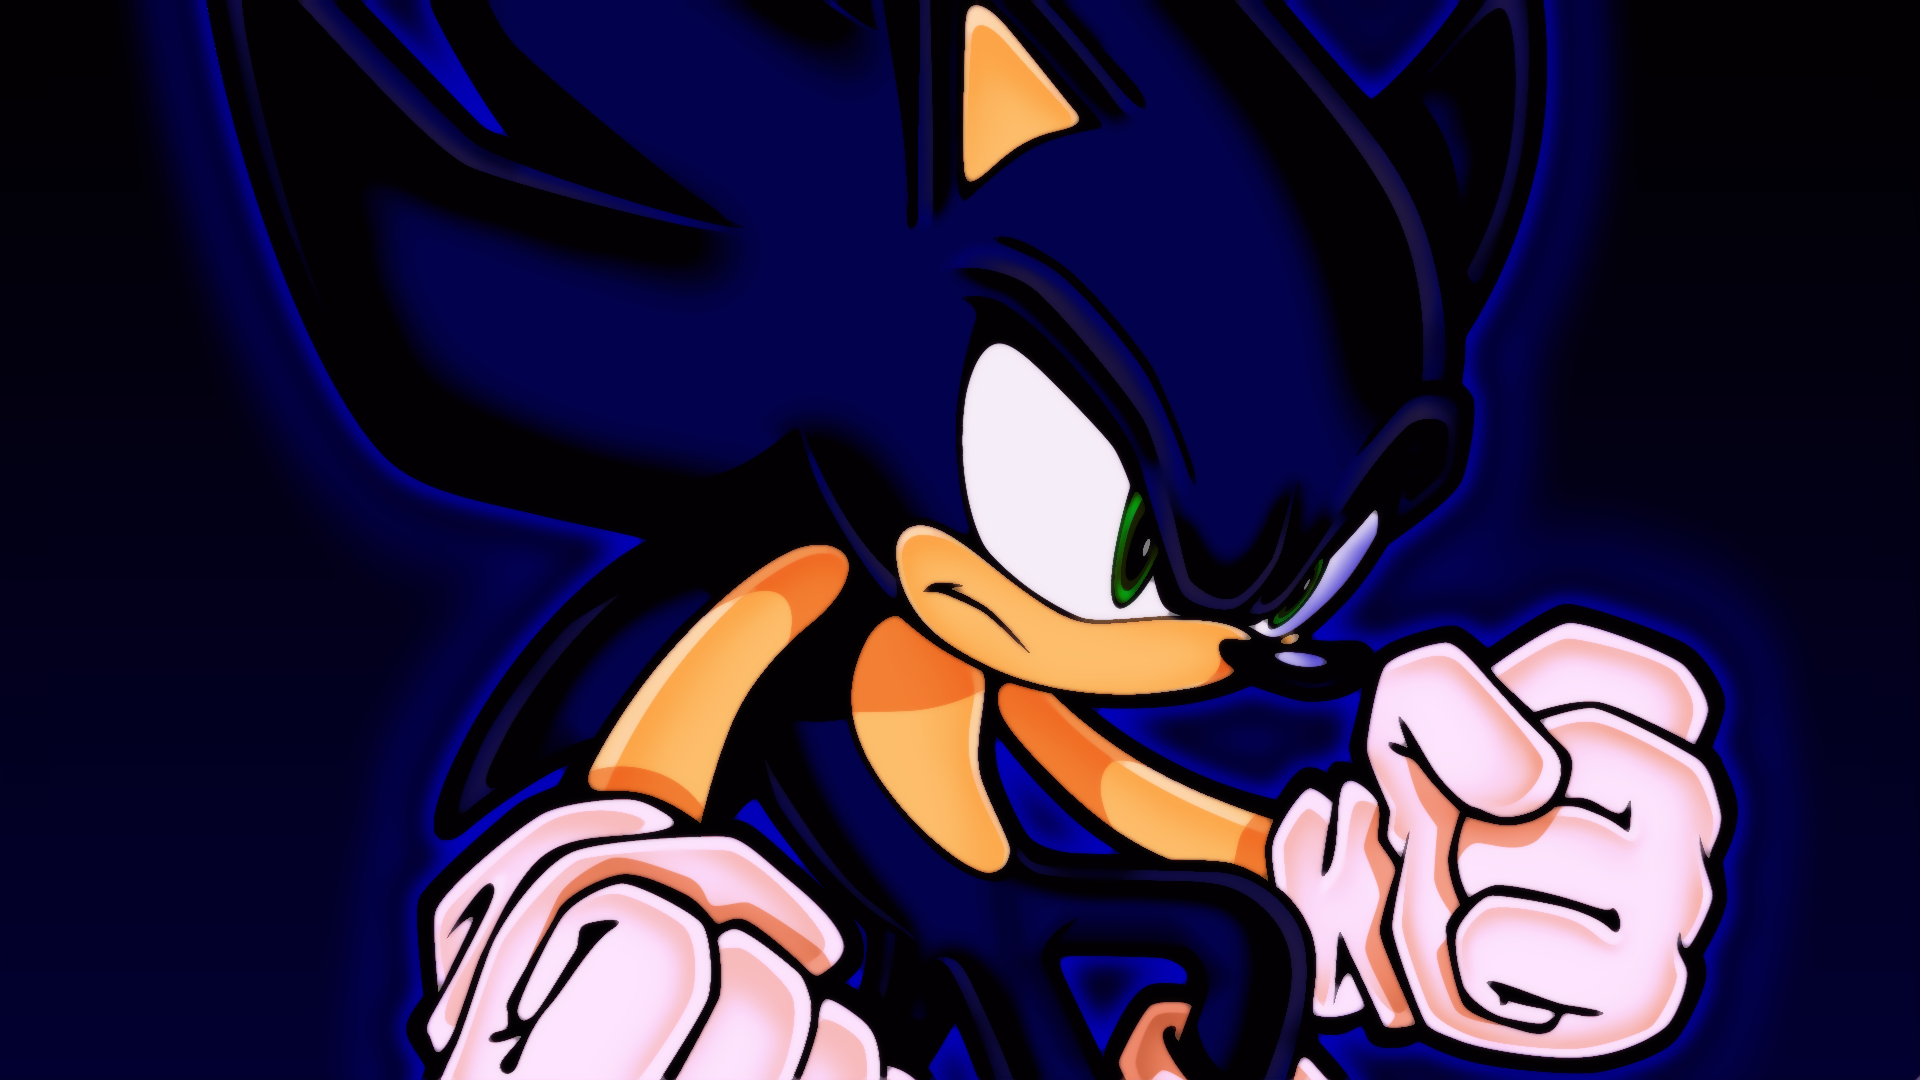 Dark Sonic Wallpaper The Hedgehog